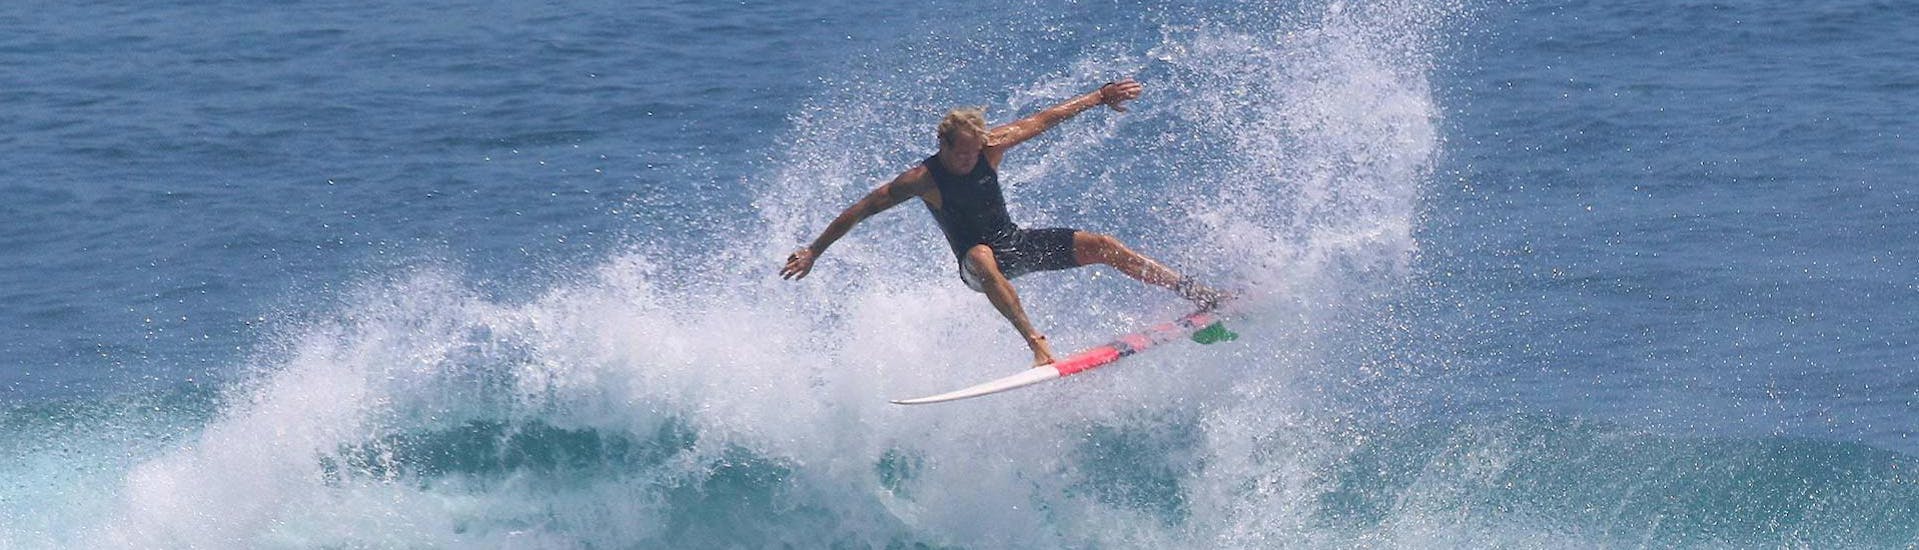 Lezioni private di surf da 7 anni per tutti i livelli.